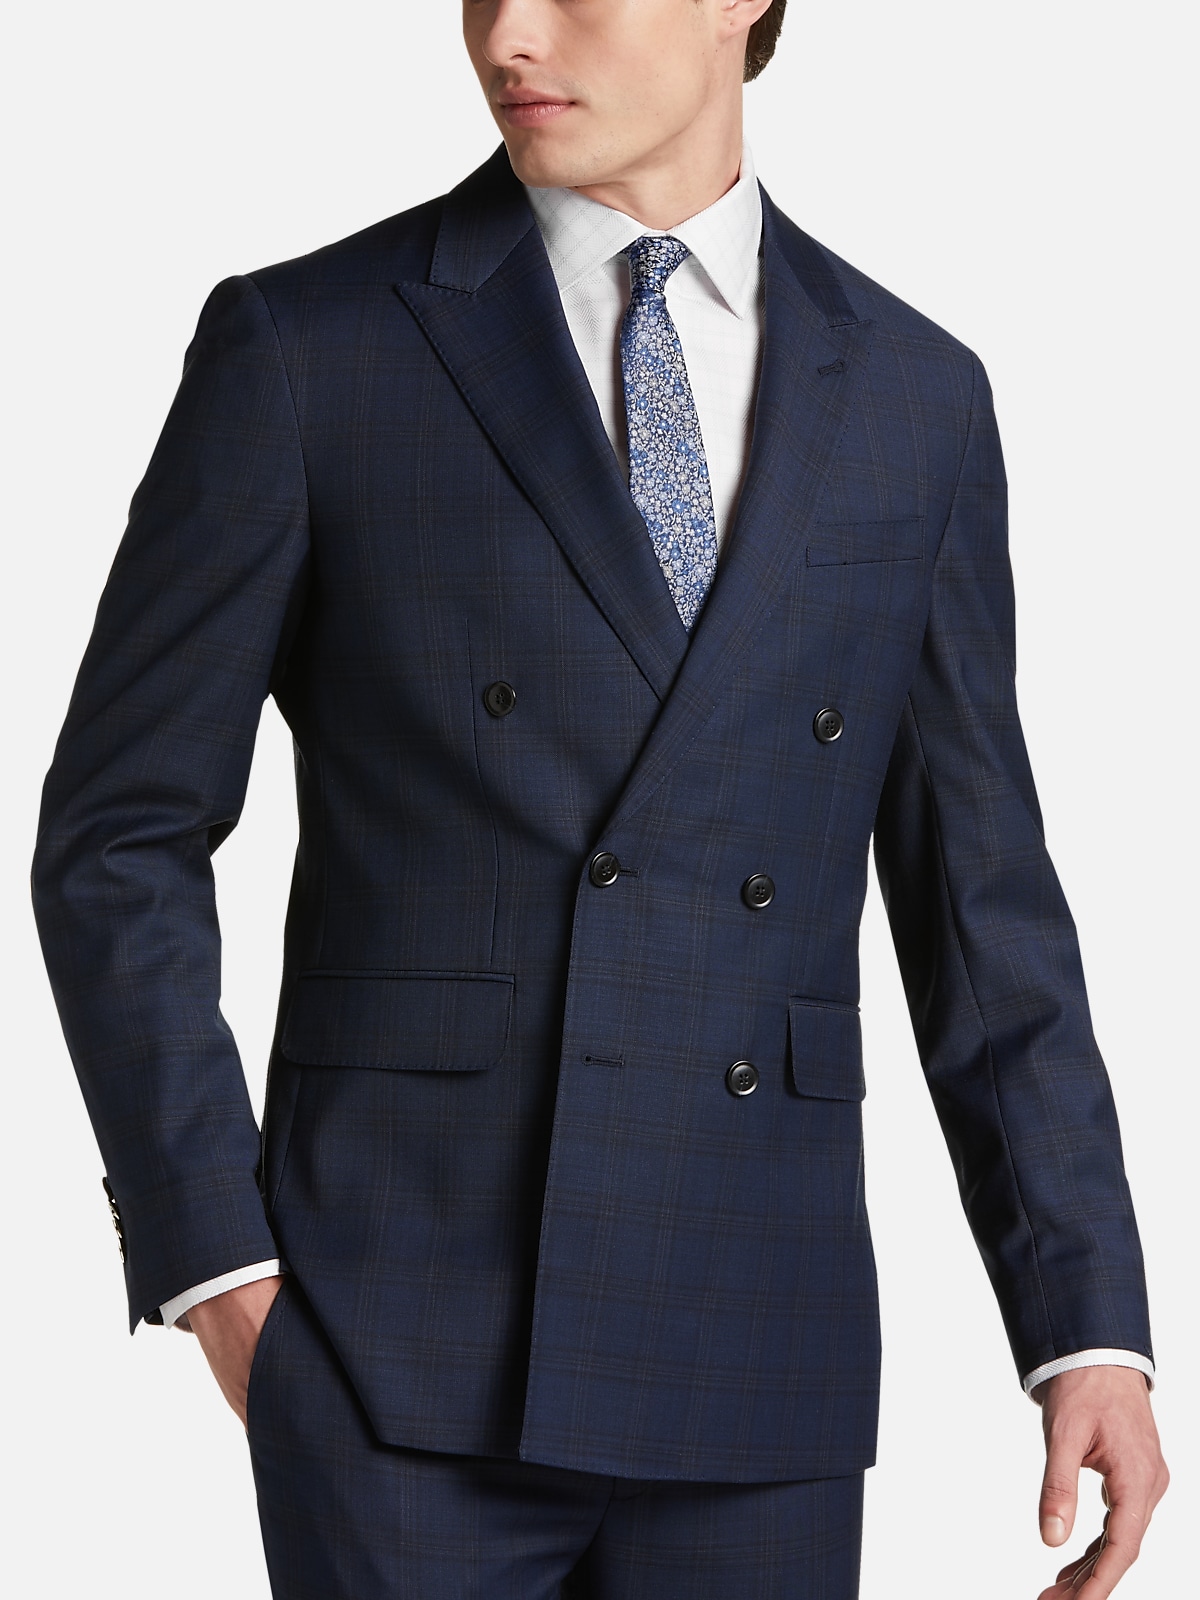 Features of a Custom Tailored Suit - Joe Button